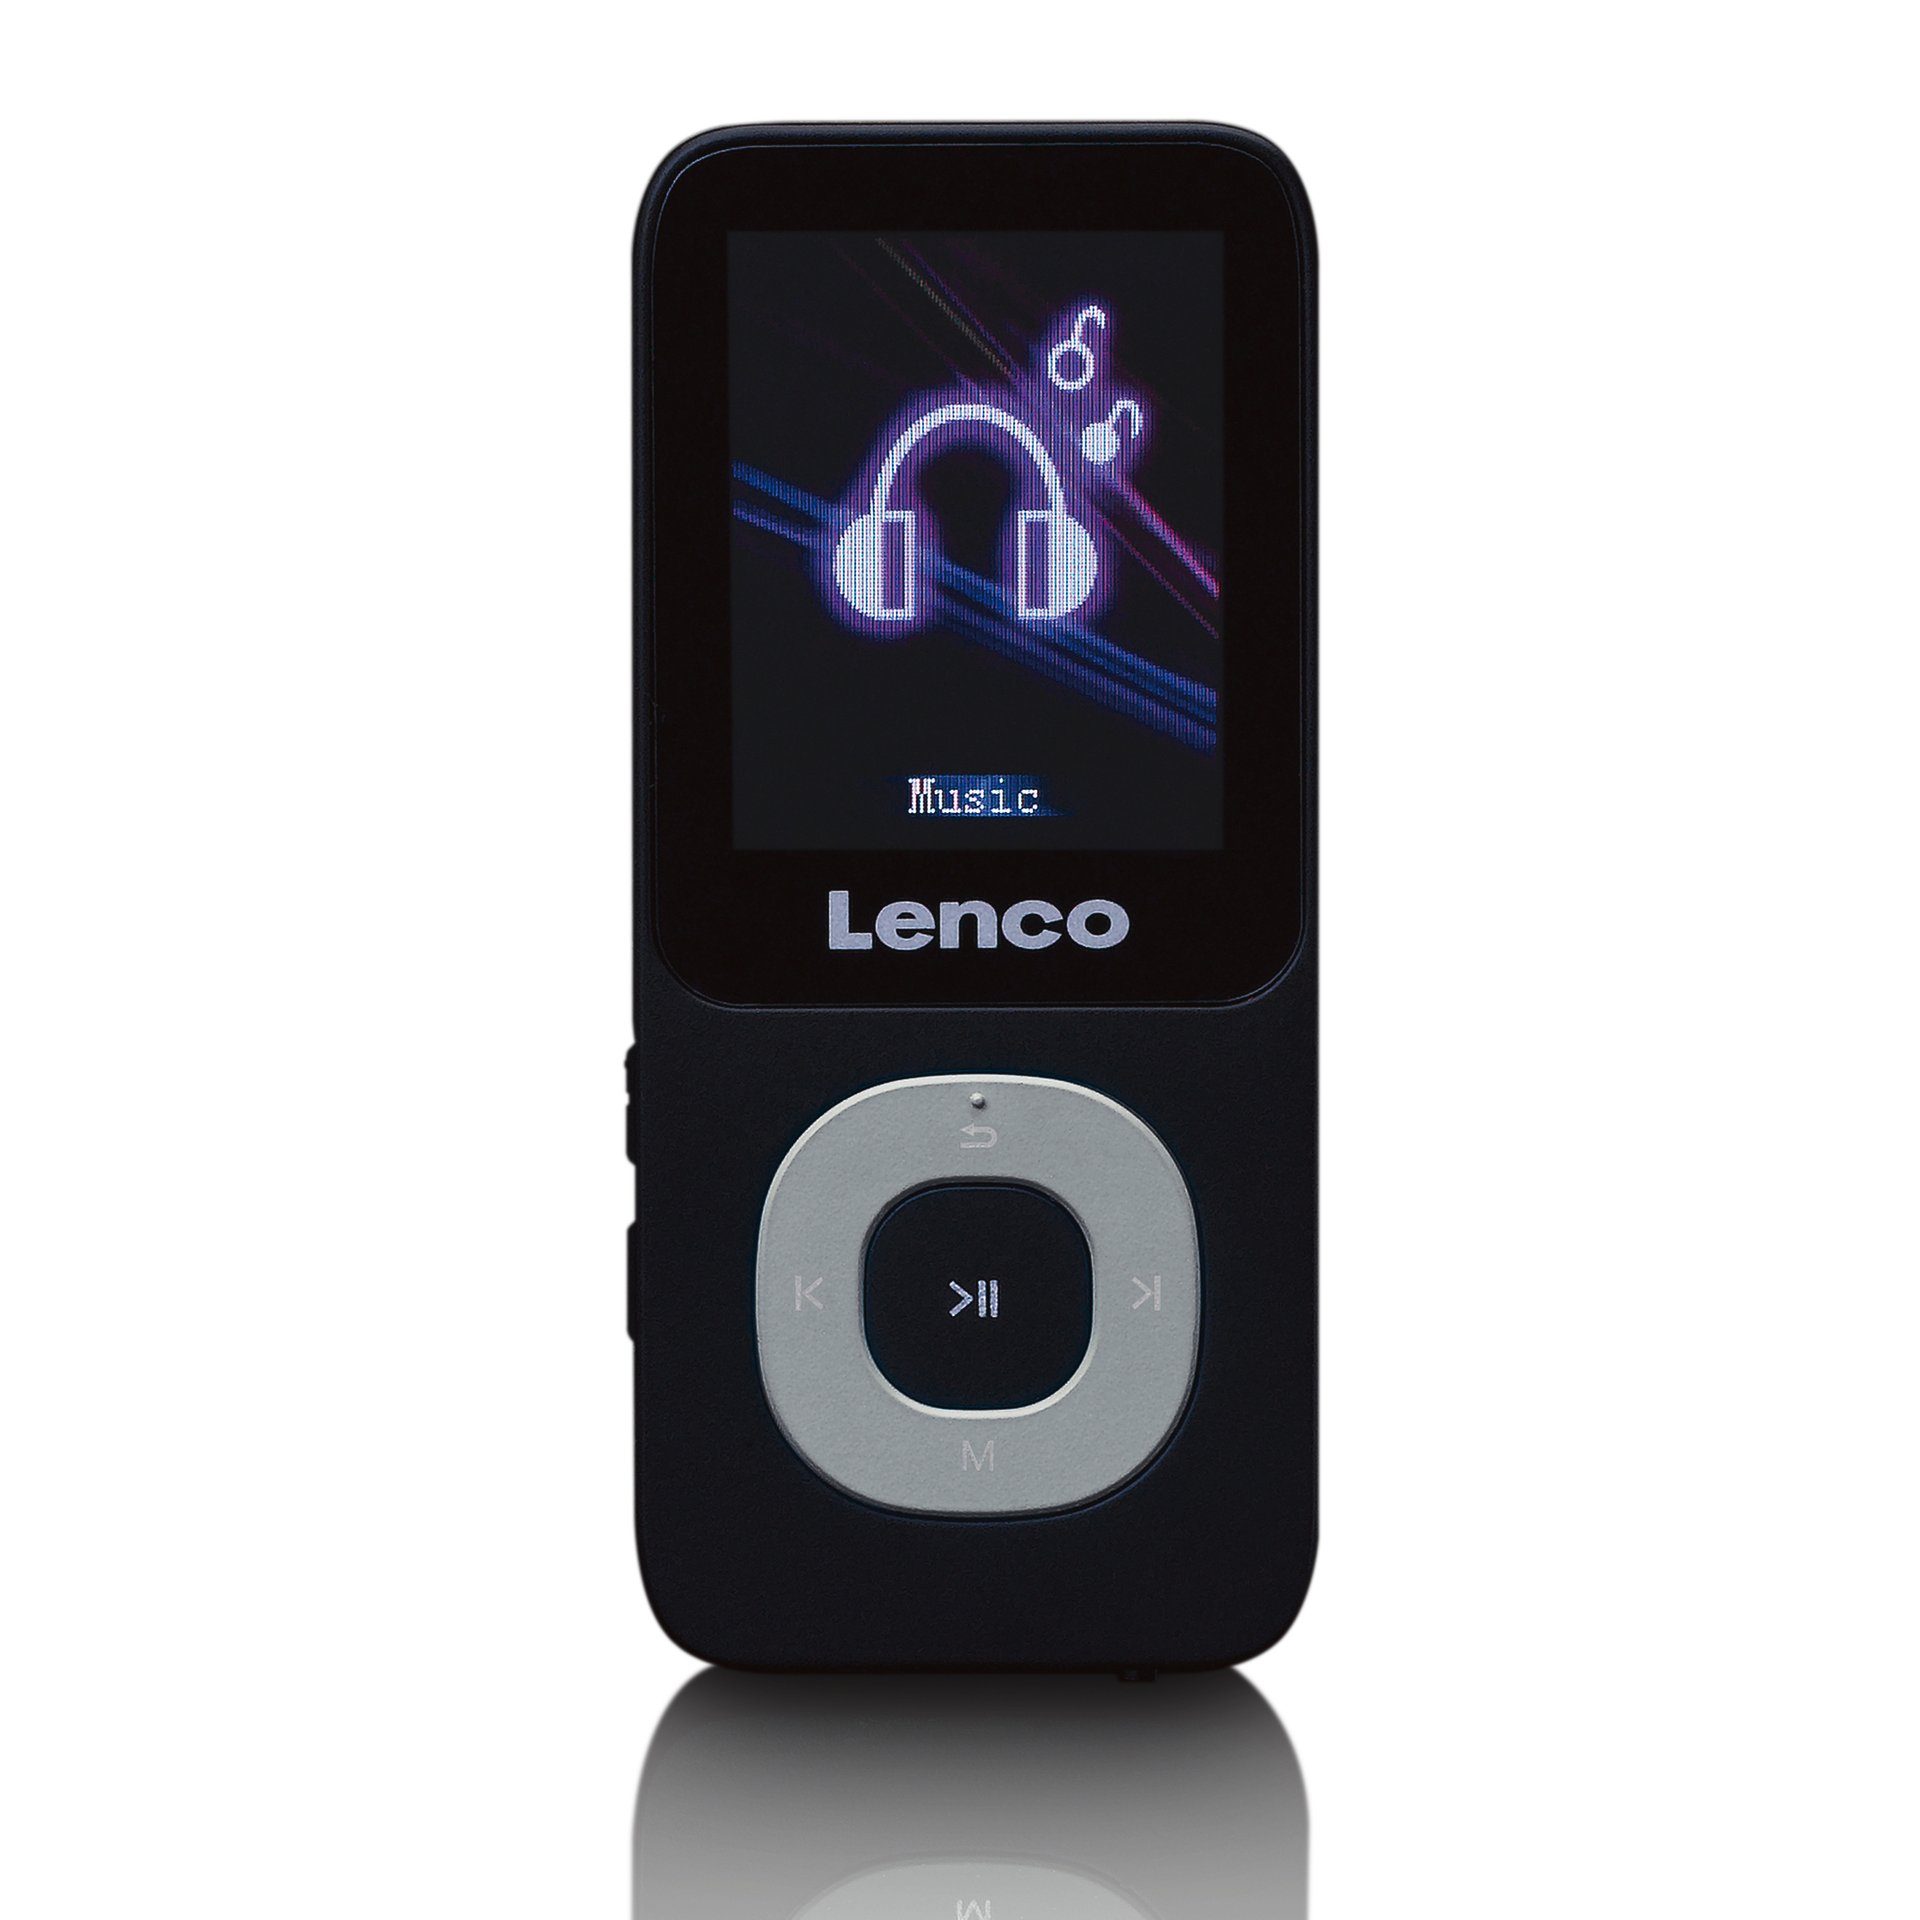 GB) MP4-Player MP3-Player (4 A004983 Lenco Xemio-659